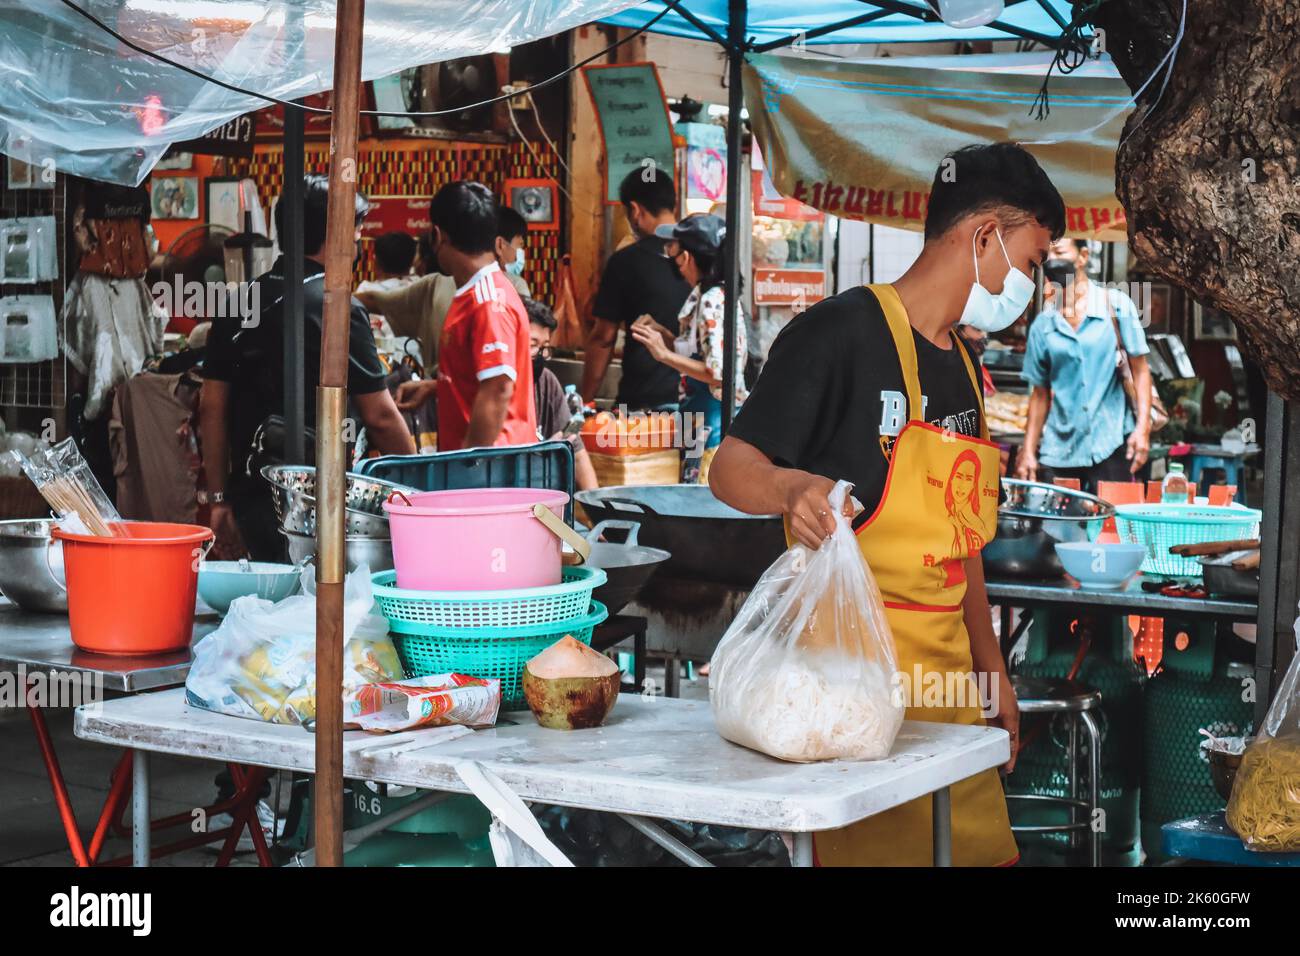 Cuisine de rue dans China Town à Bangkok, Thaïlande Banque D'Images